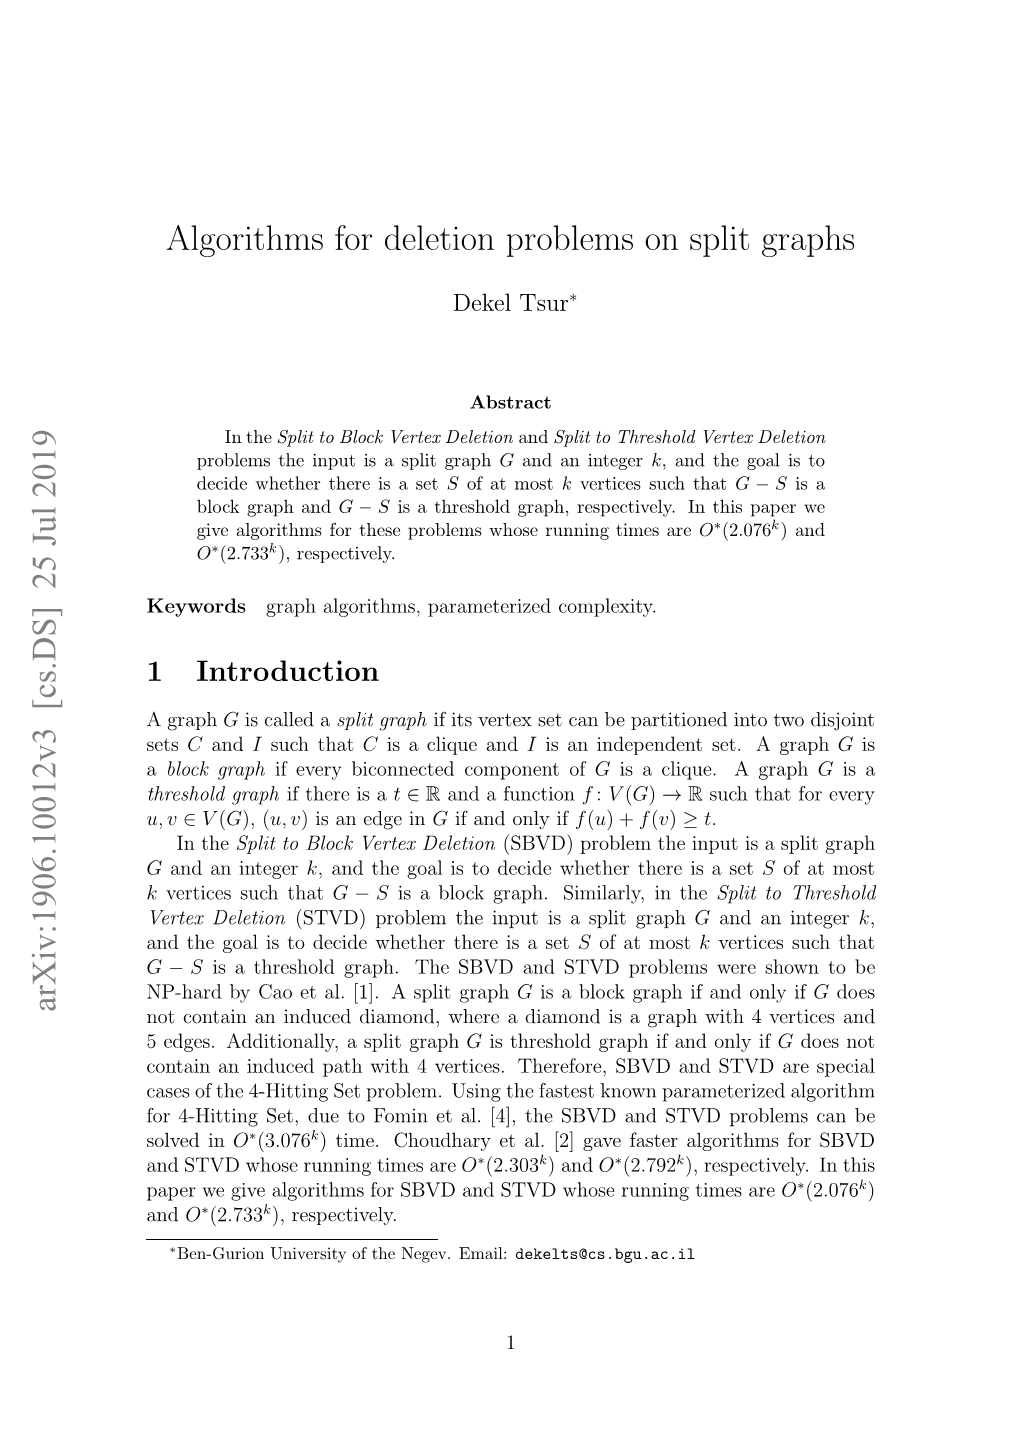 Algorithms for Deletion Problems on Split Graphs